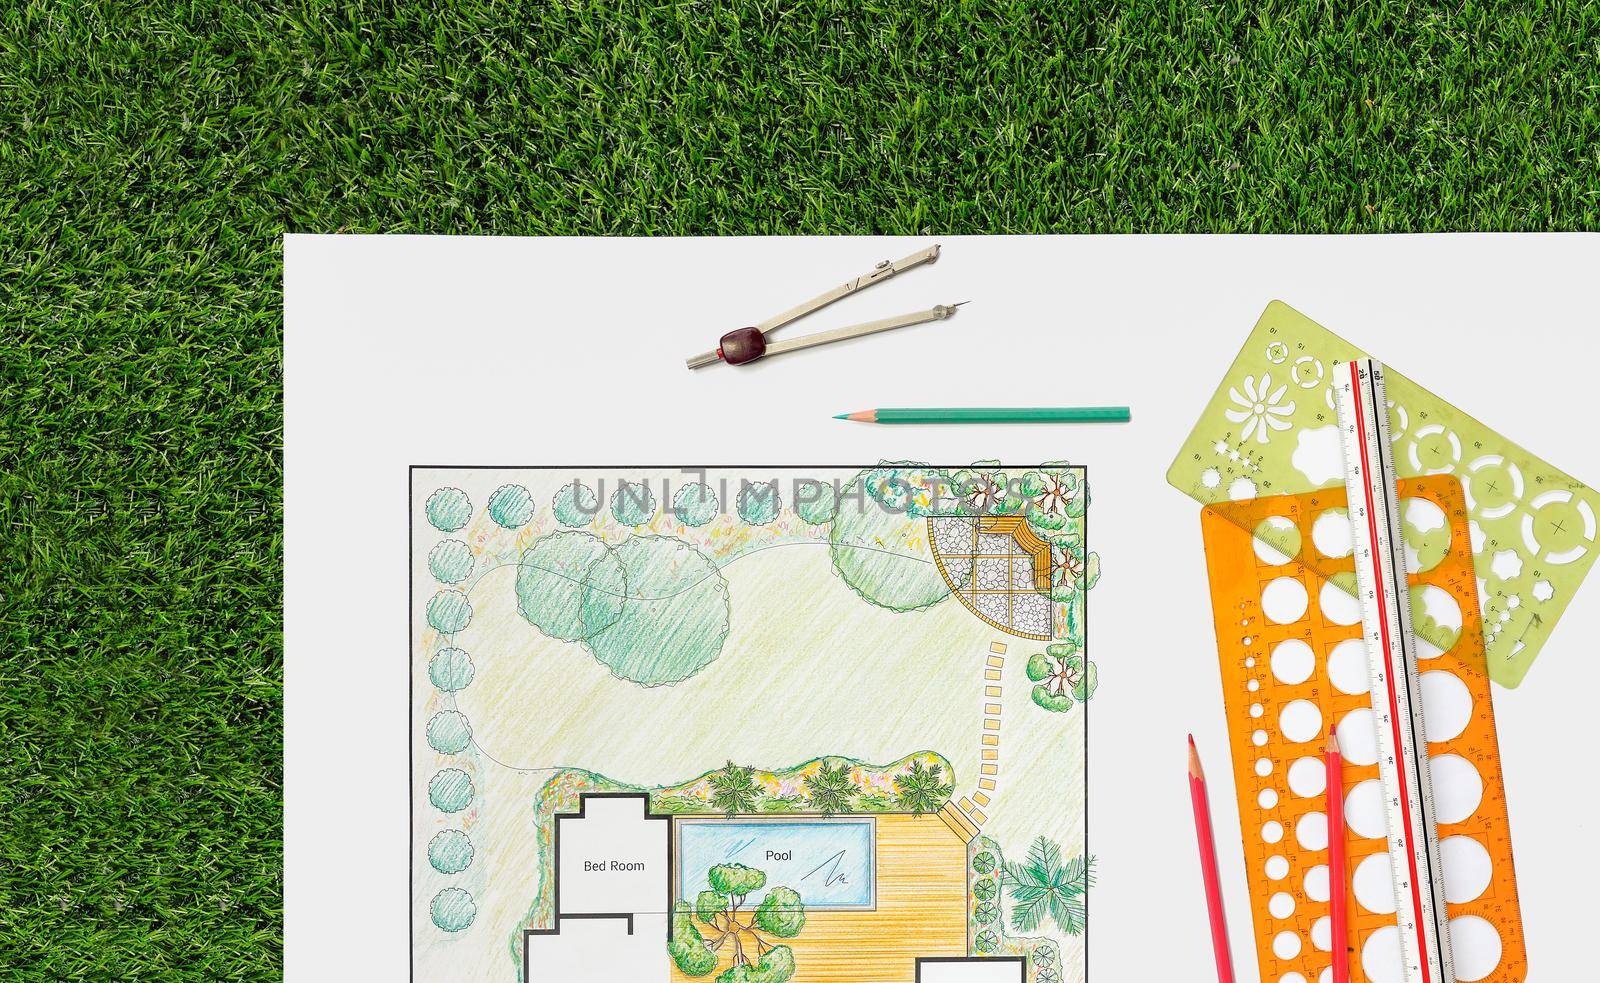 Landscape architect design backyard plan for villa by toa55